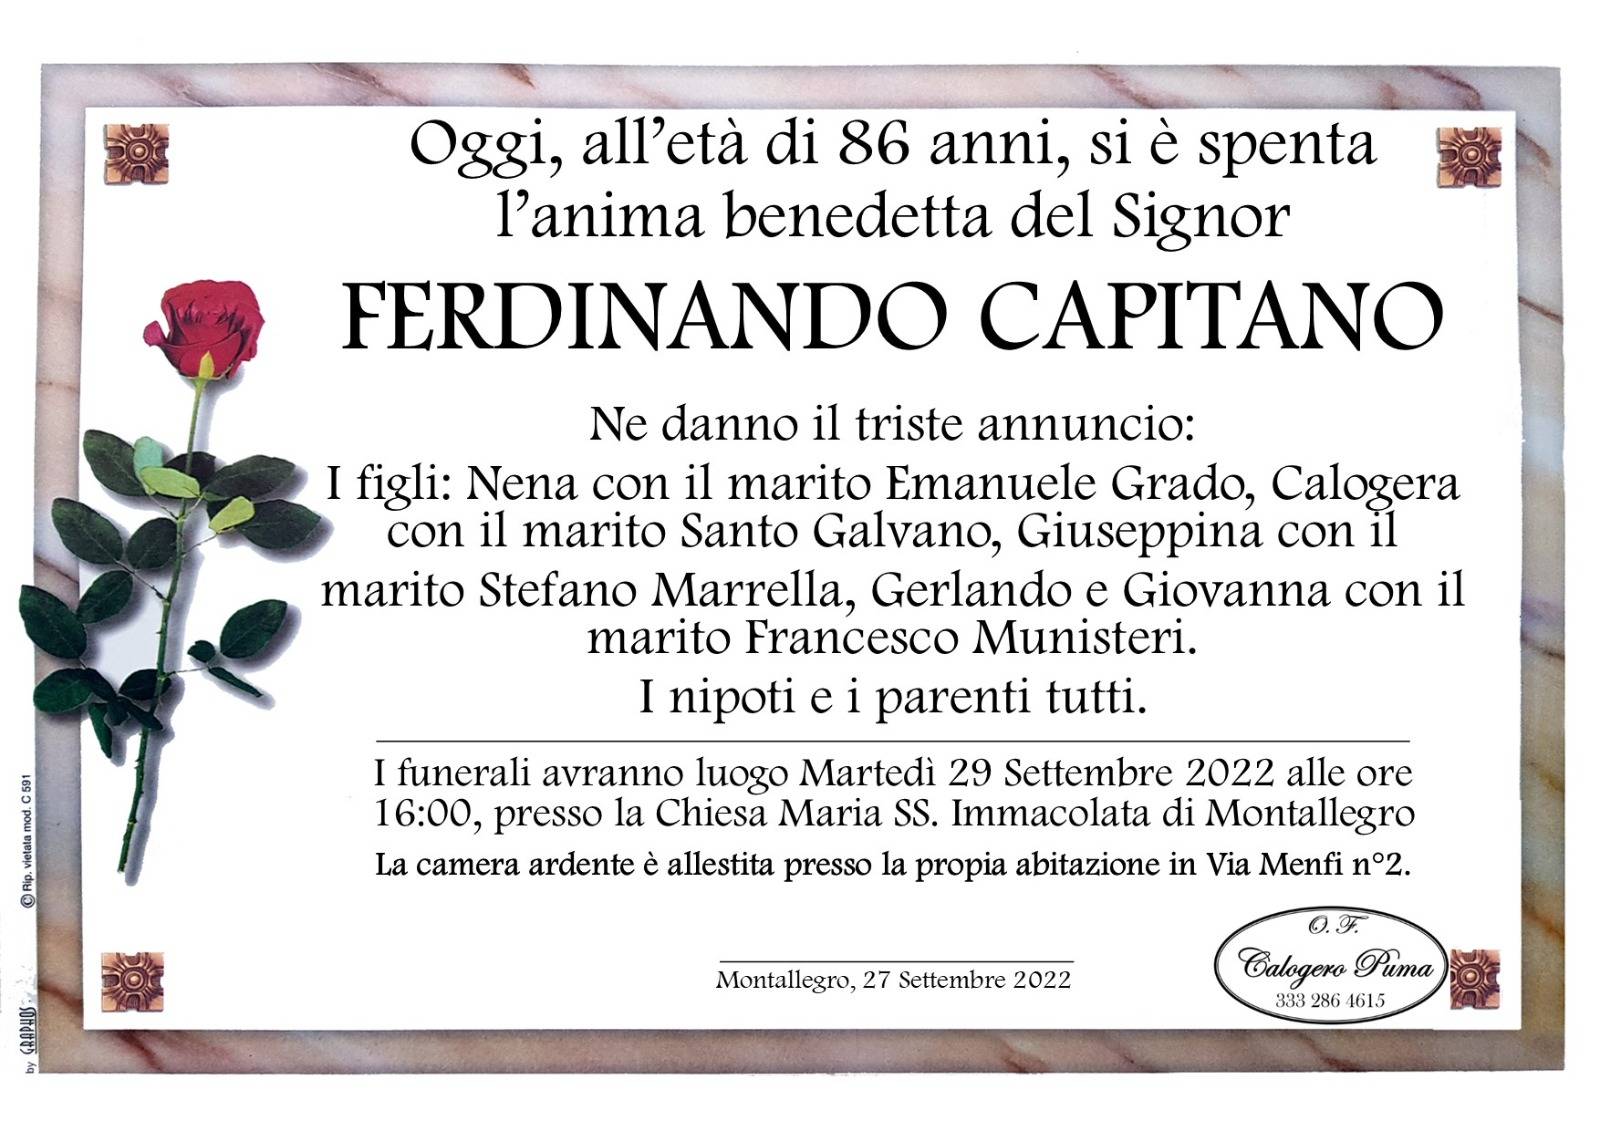 Ferdinando Capitano